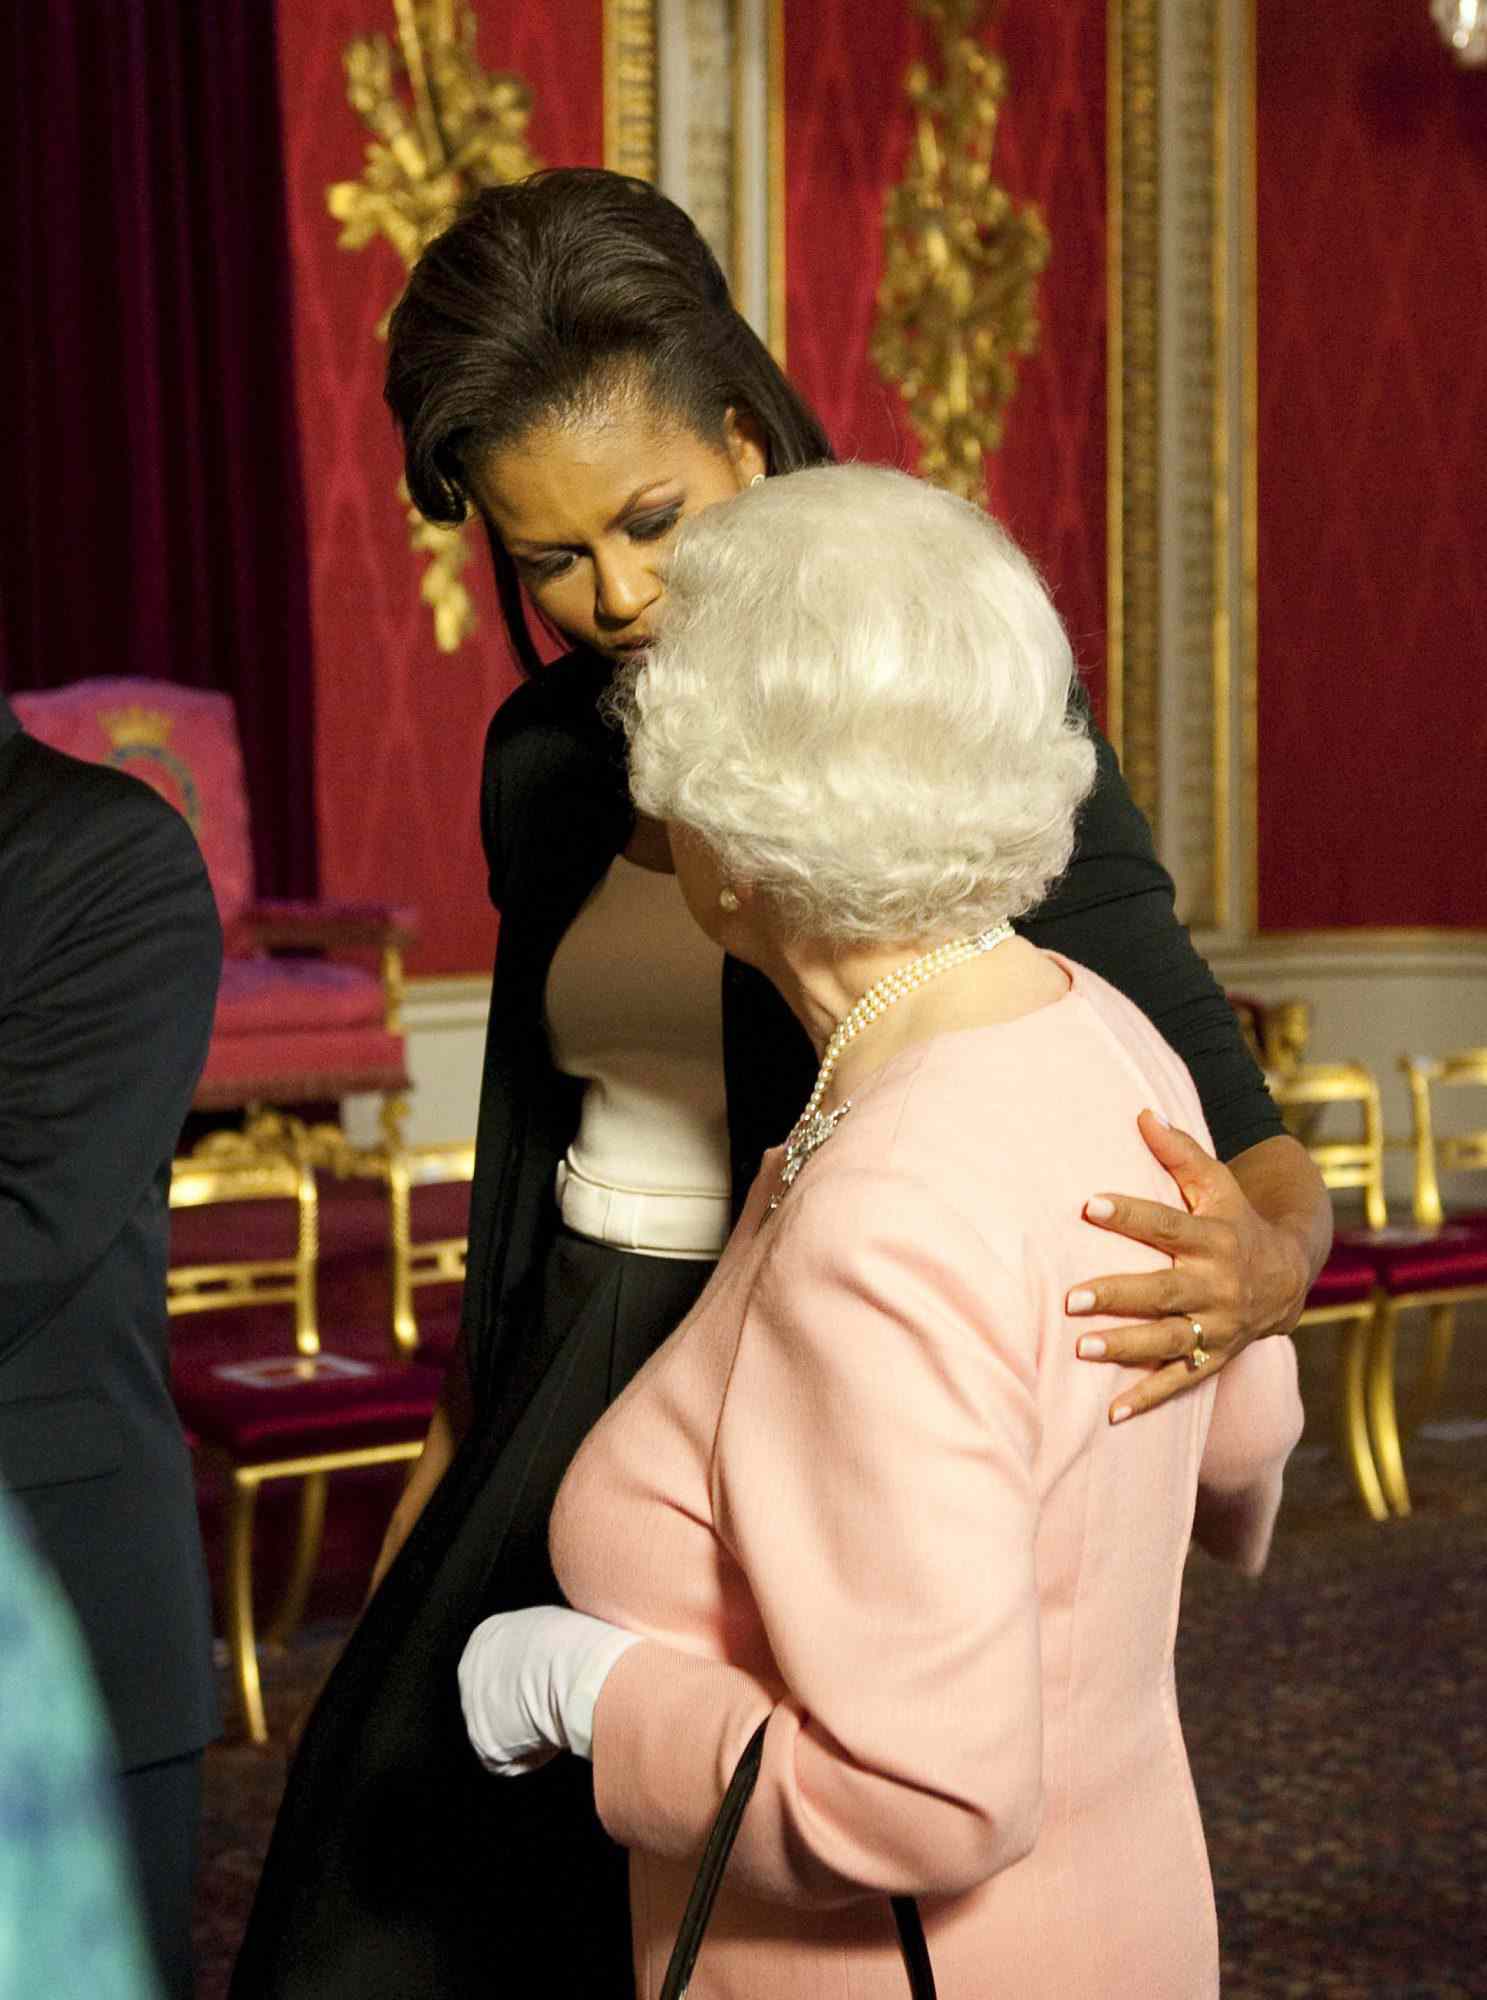 Michelle Obama and Queen Elizabeth